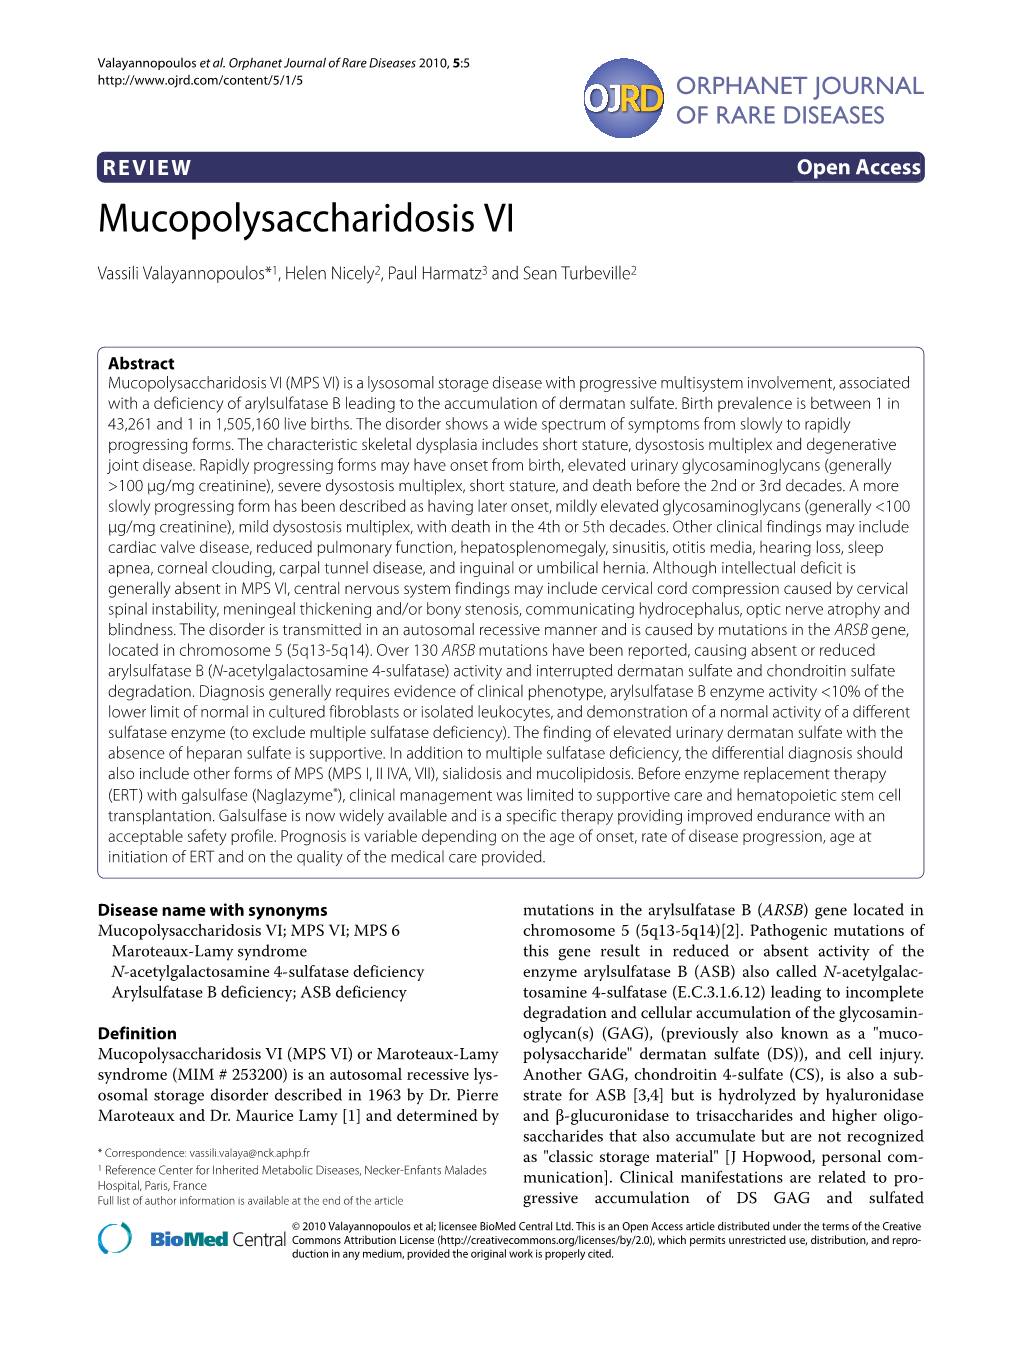 Mucopolysaccharidosis VI